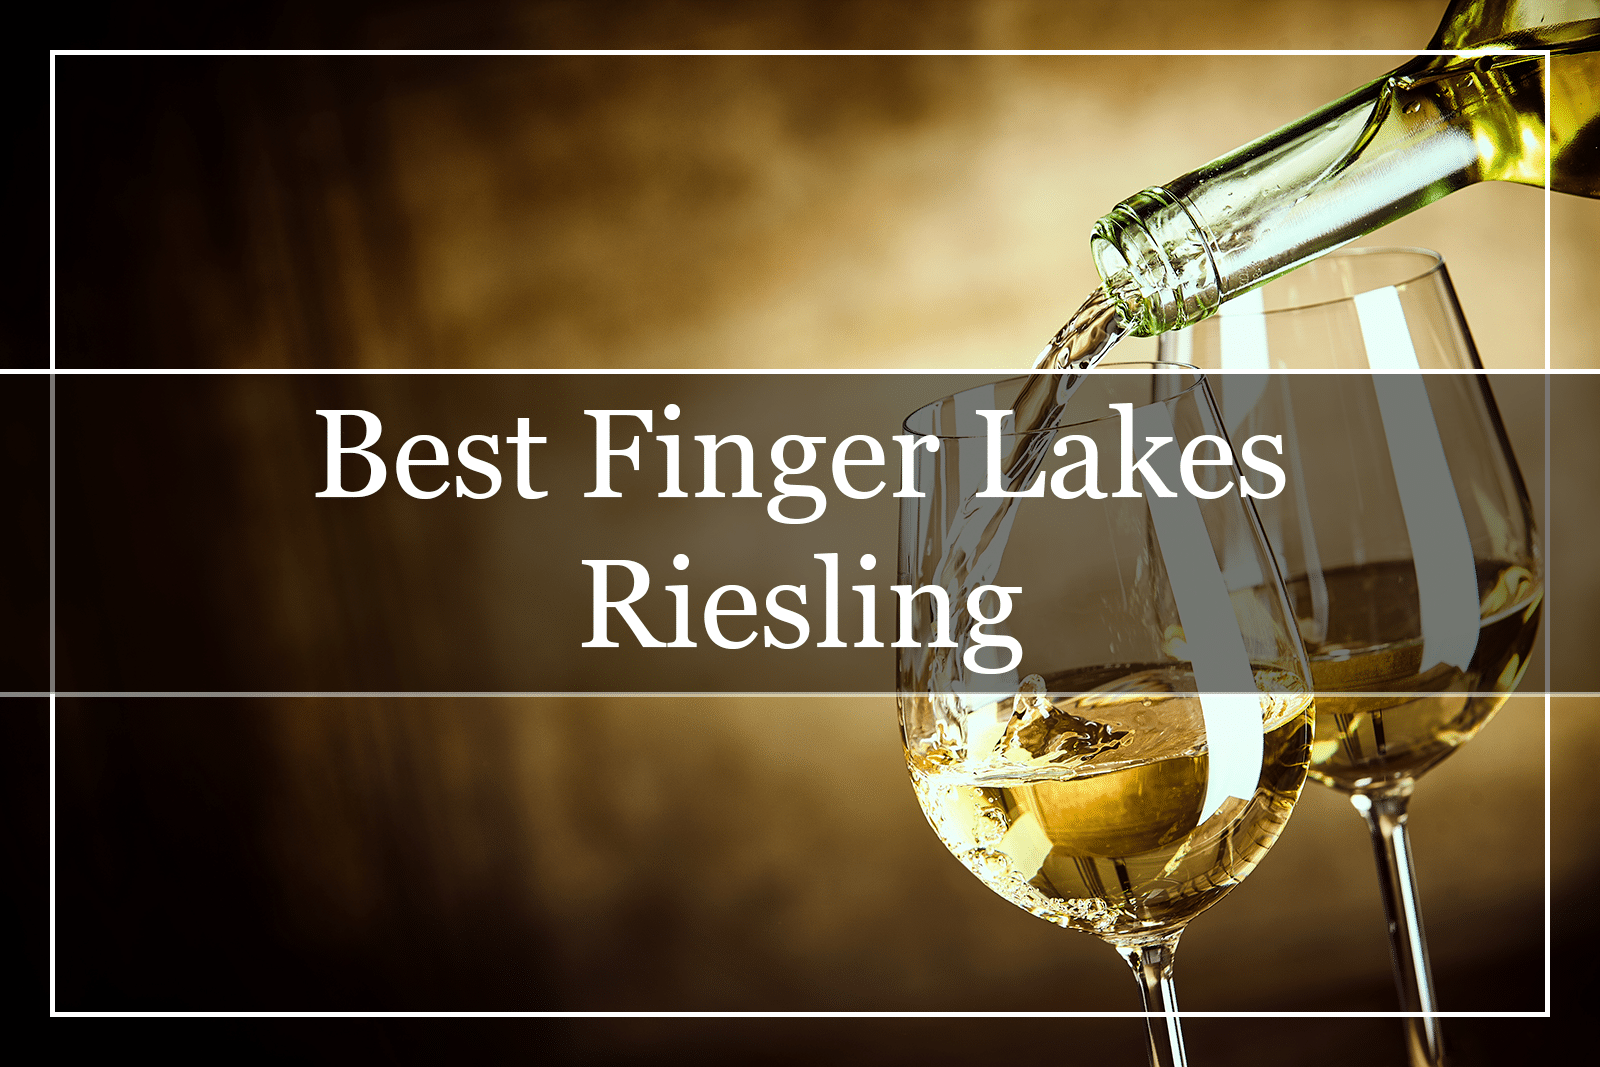 7 Best Finger Lakes Riesling Wines (2021)